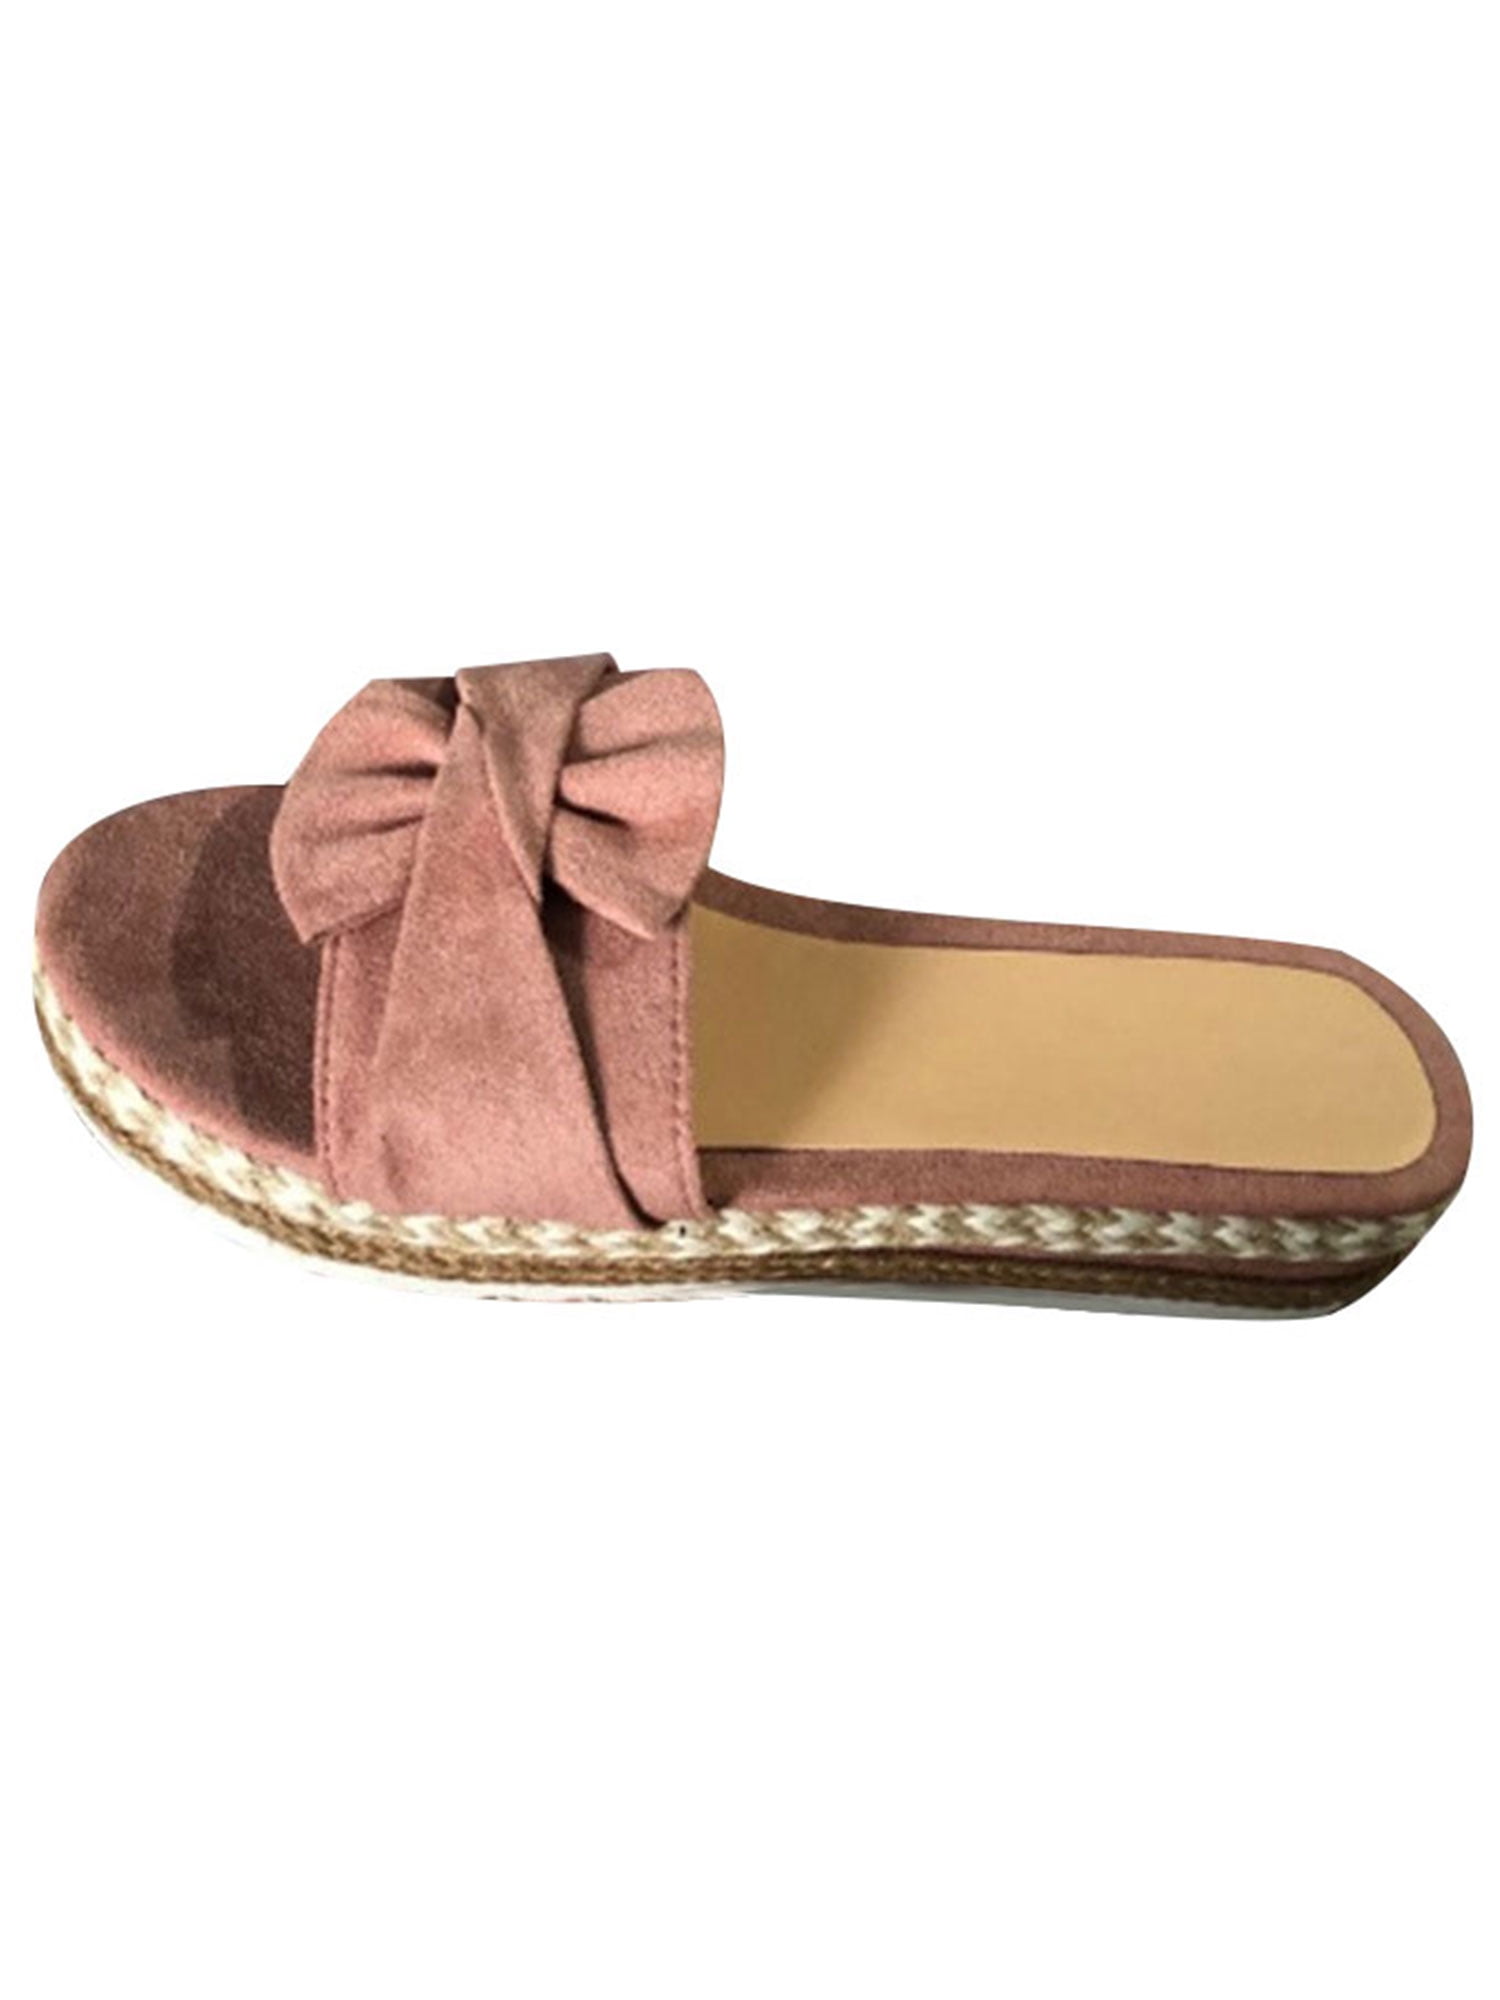 Ladies Womens Slip On Mules Platform Espadrilles Wedge Summer Sandals Shoes Size 